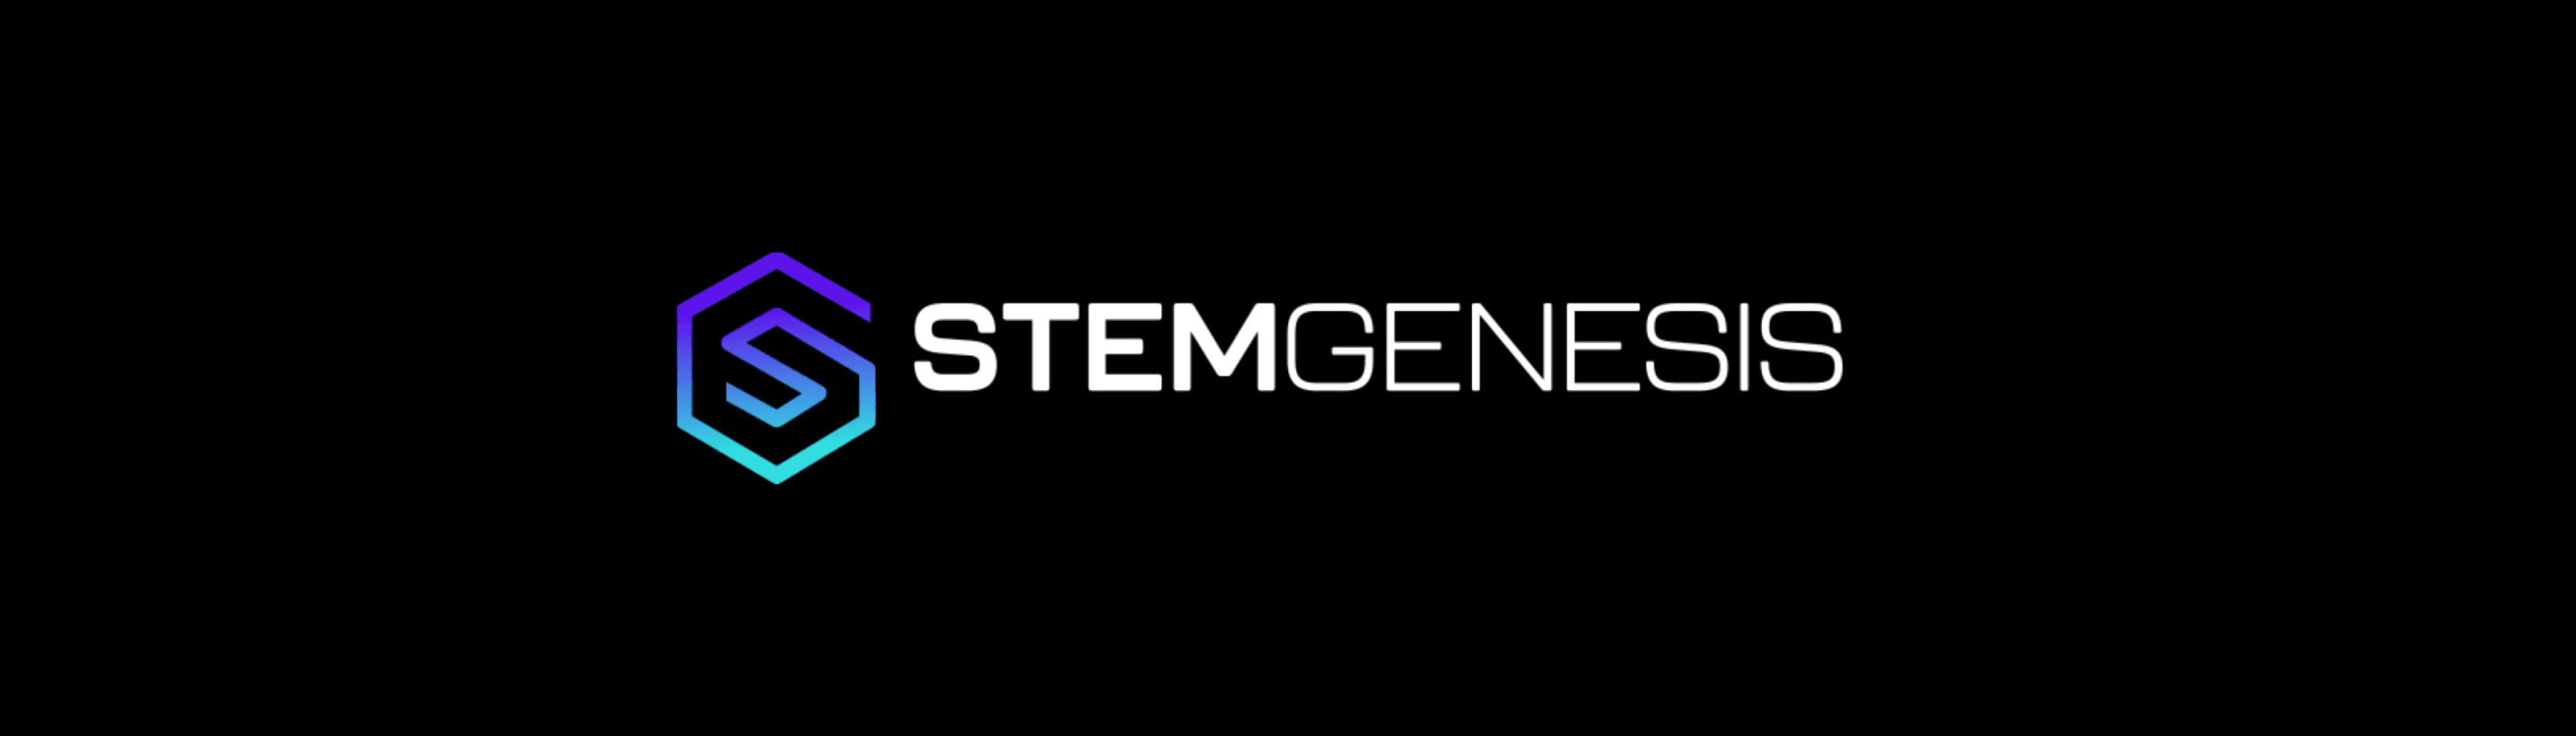 STEMgenesis banner